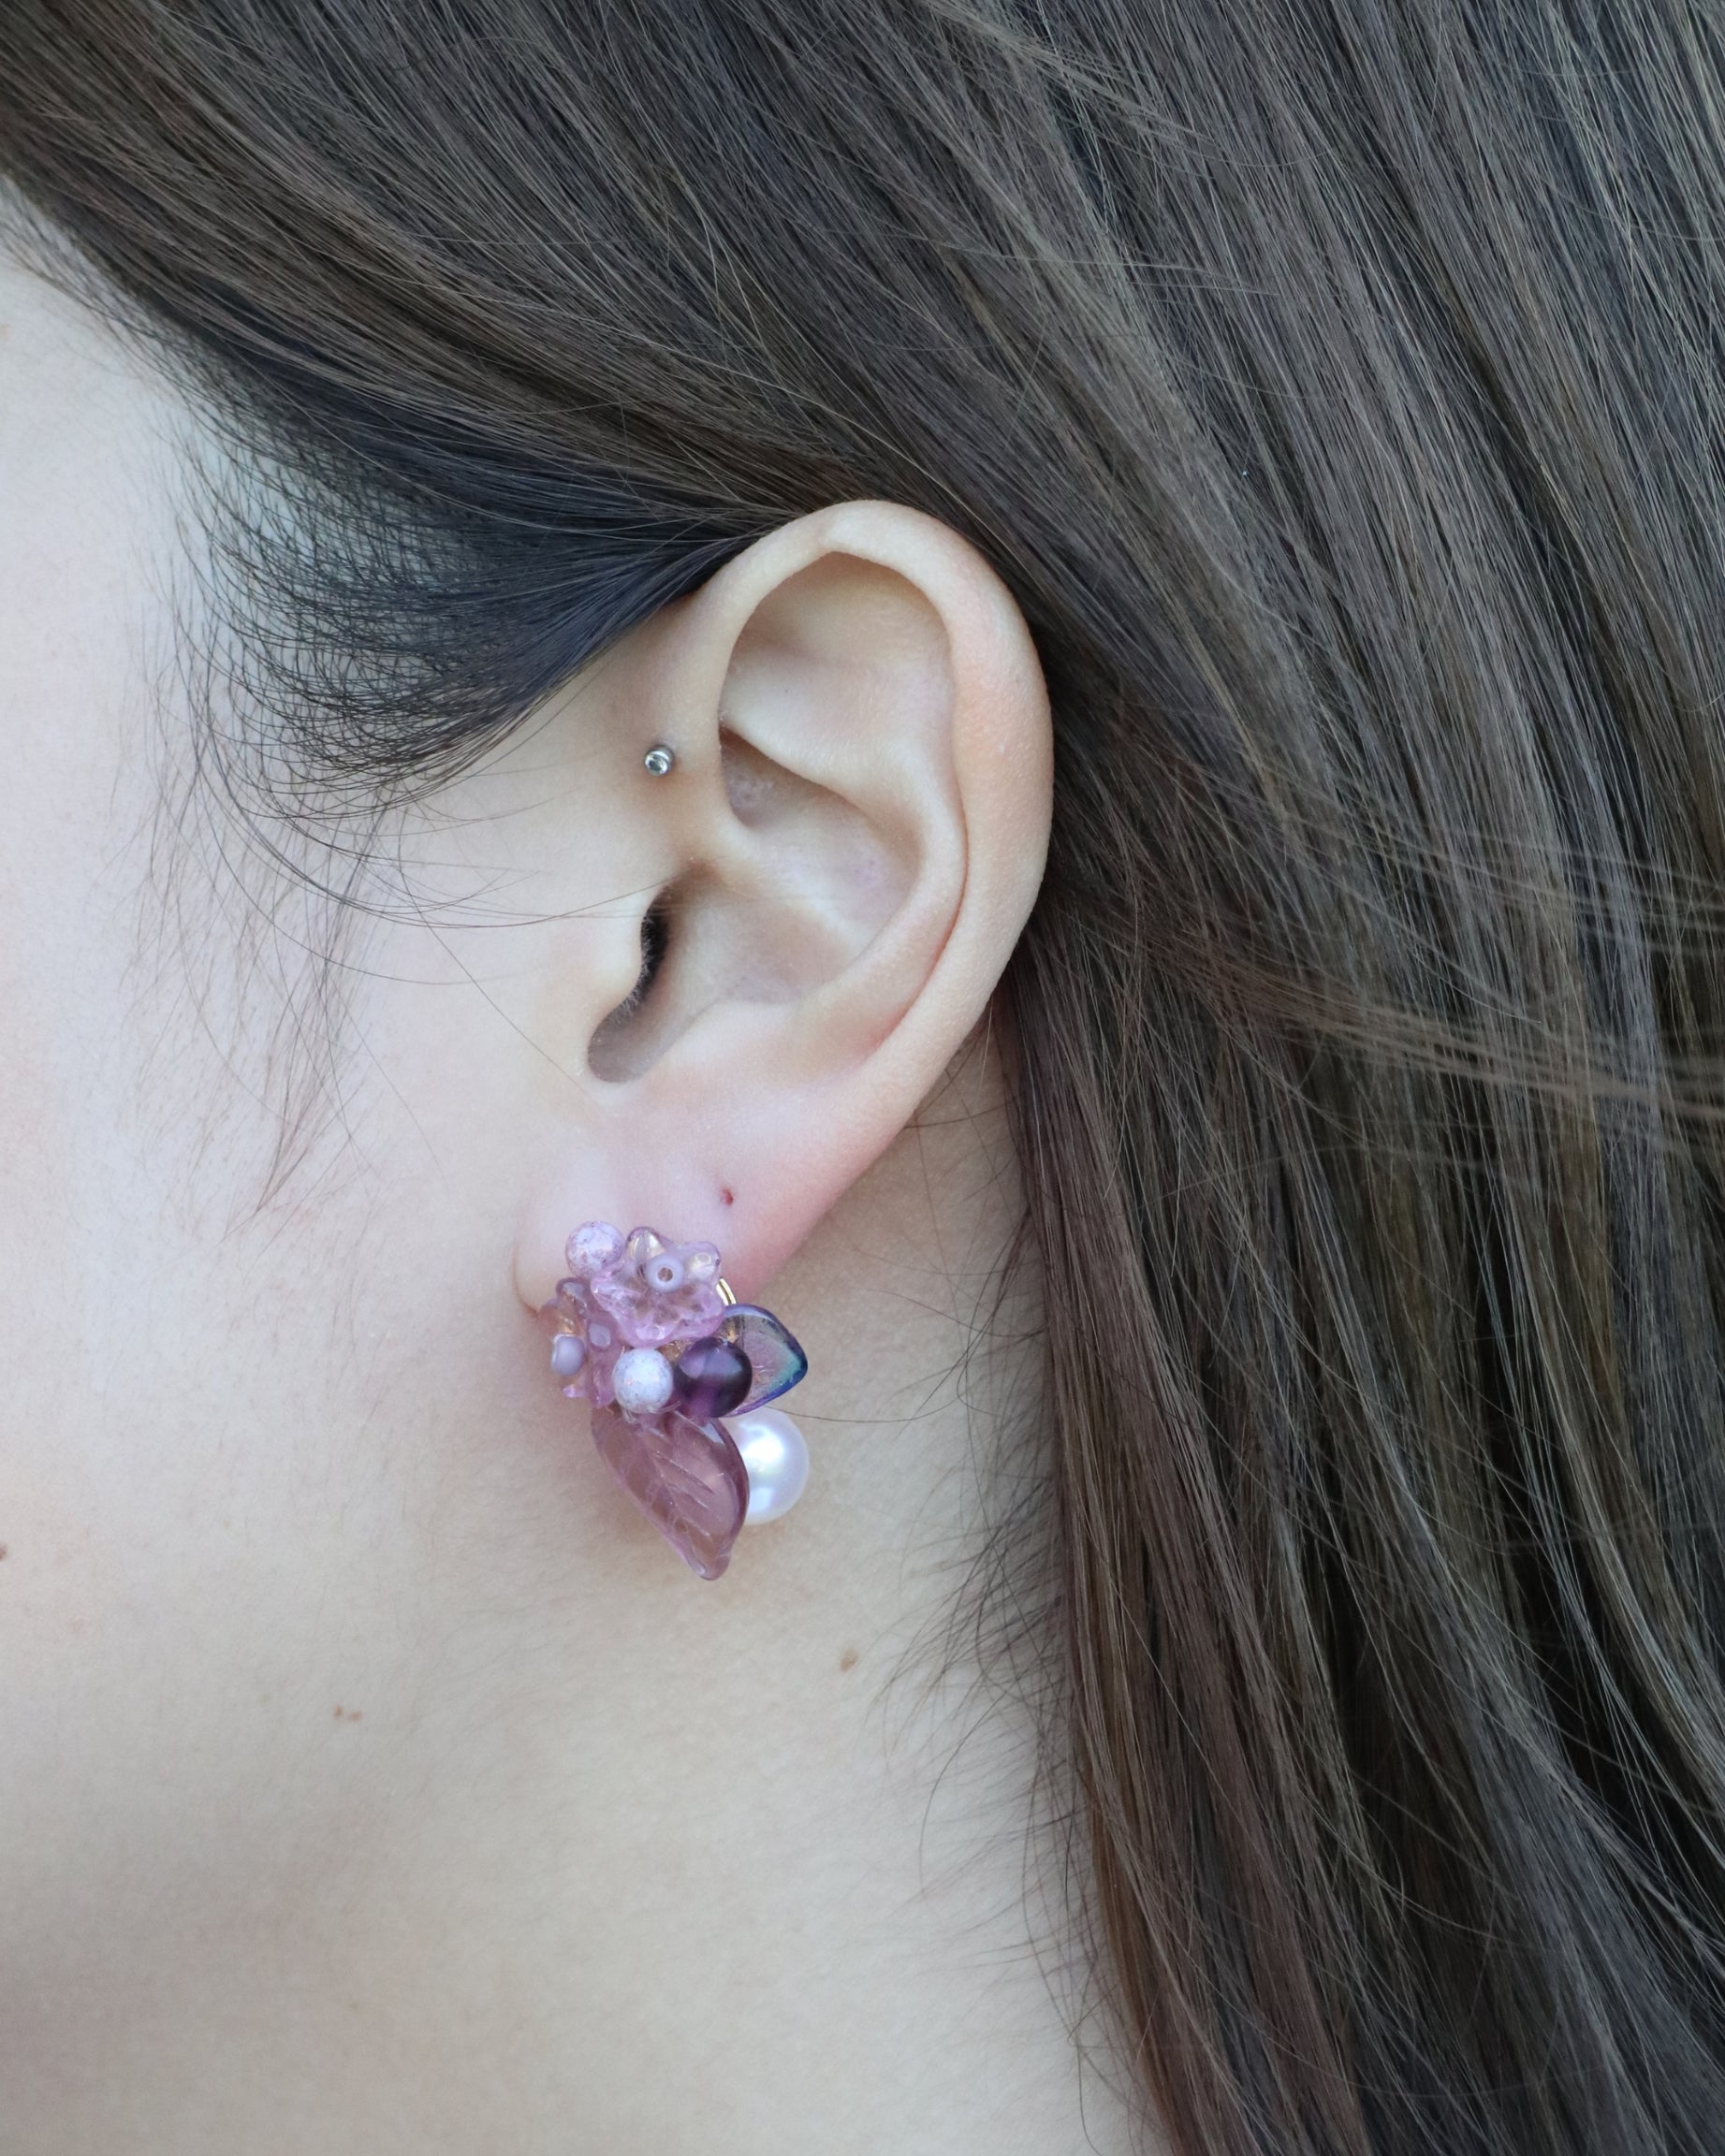 blossom flower stud earrings on ear